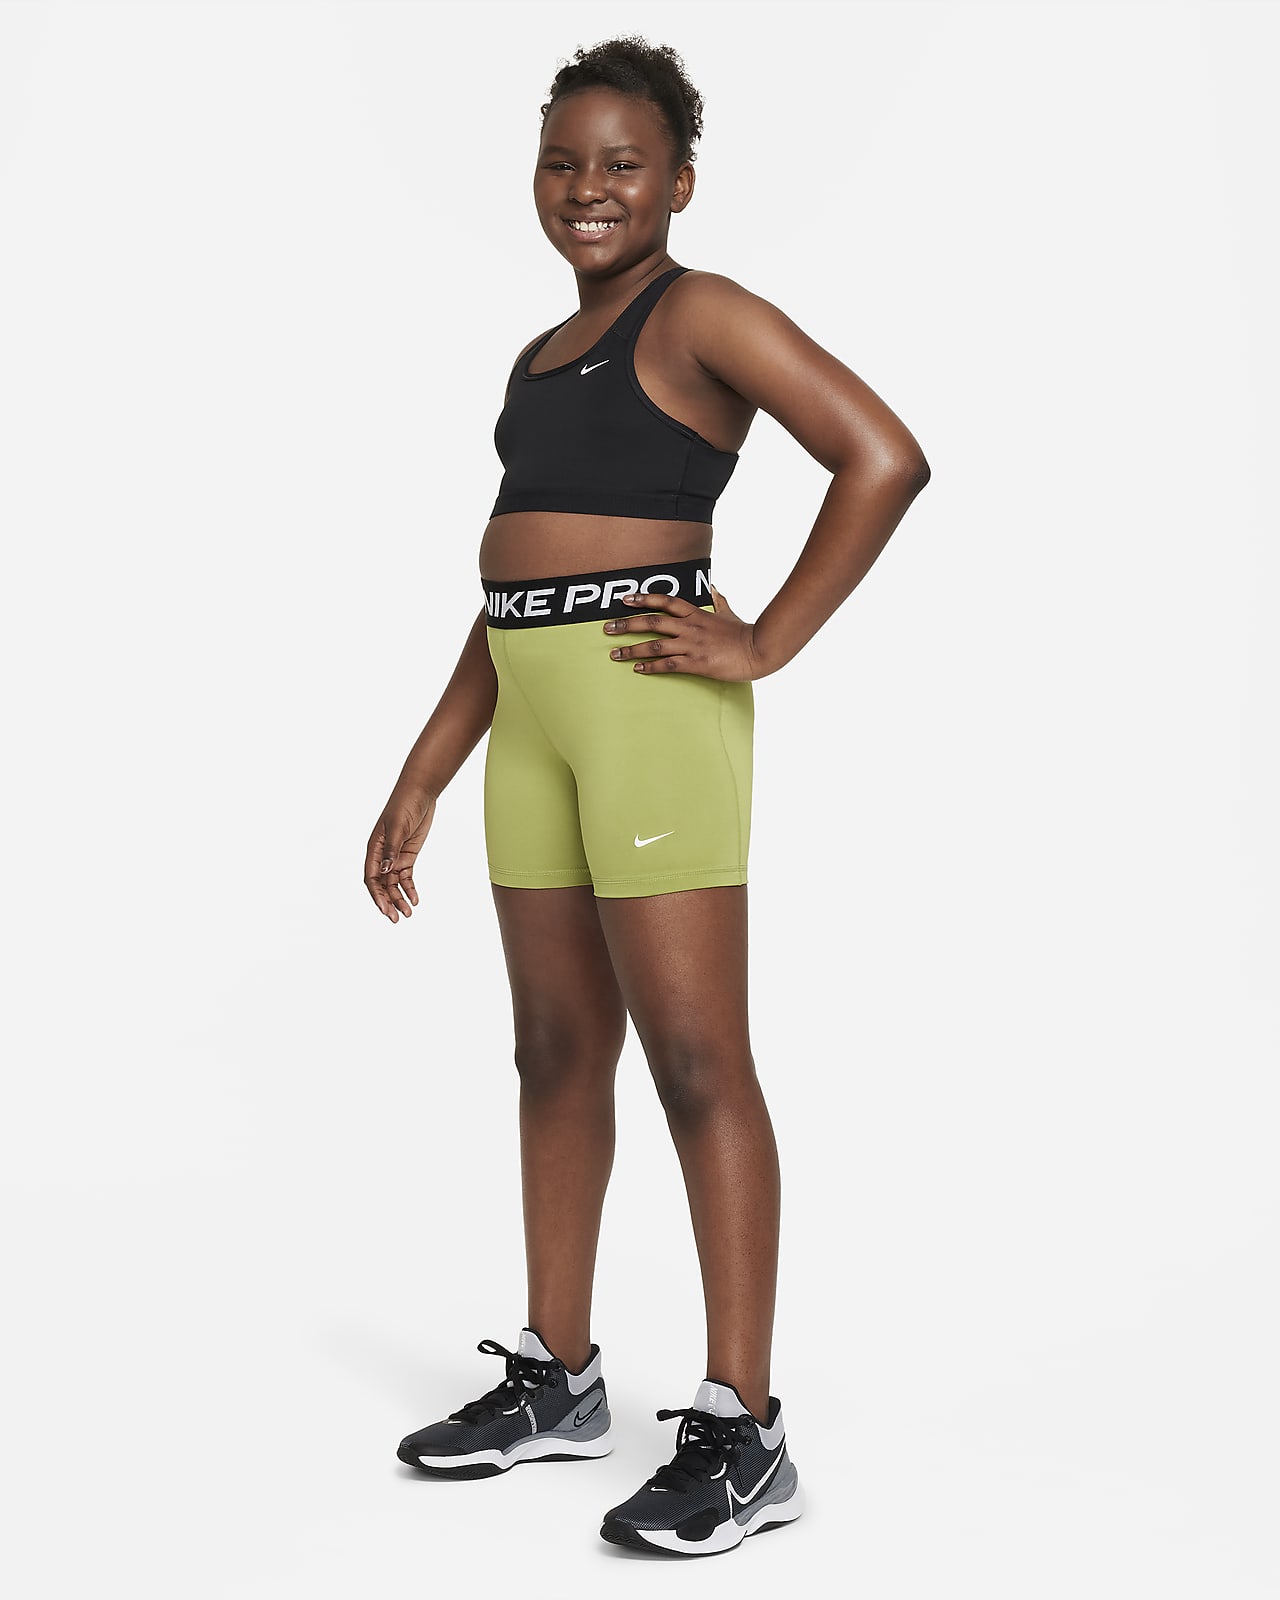 Nike Pro Training Dri-Fit 5 inch shorts in khaki green